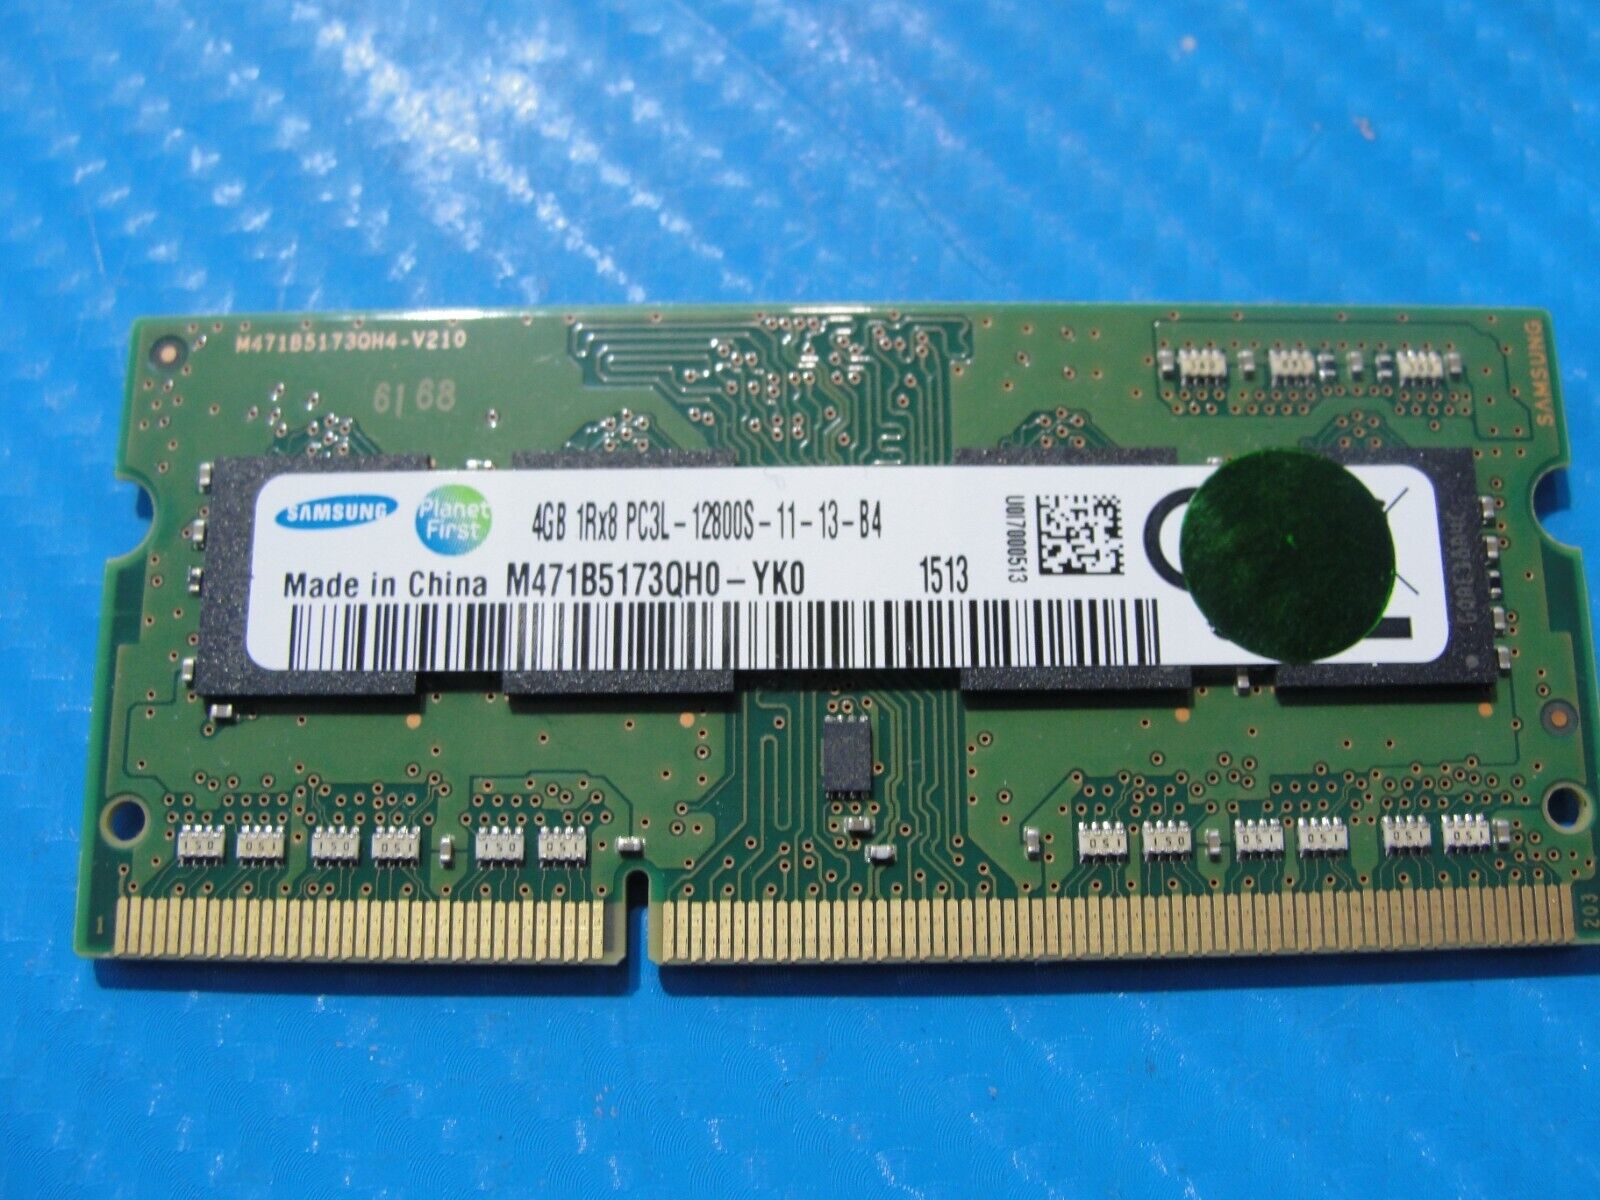 Lenovo T440s Samsung 4GB PC3L-12800S SODIMM Memory RAM M471B5173QH0-YK0